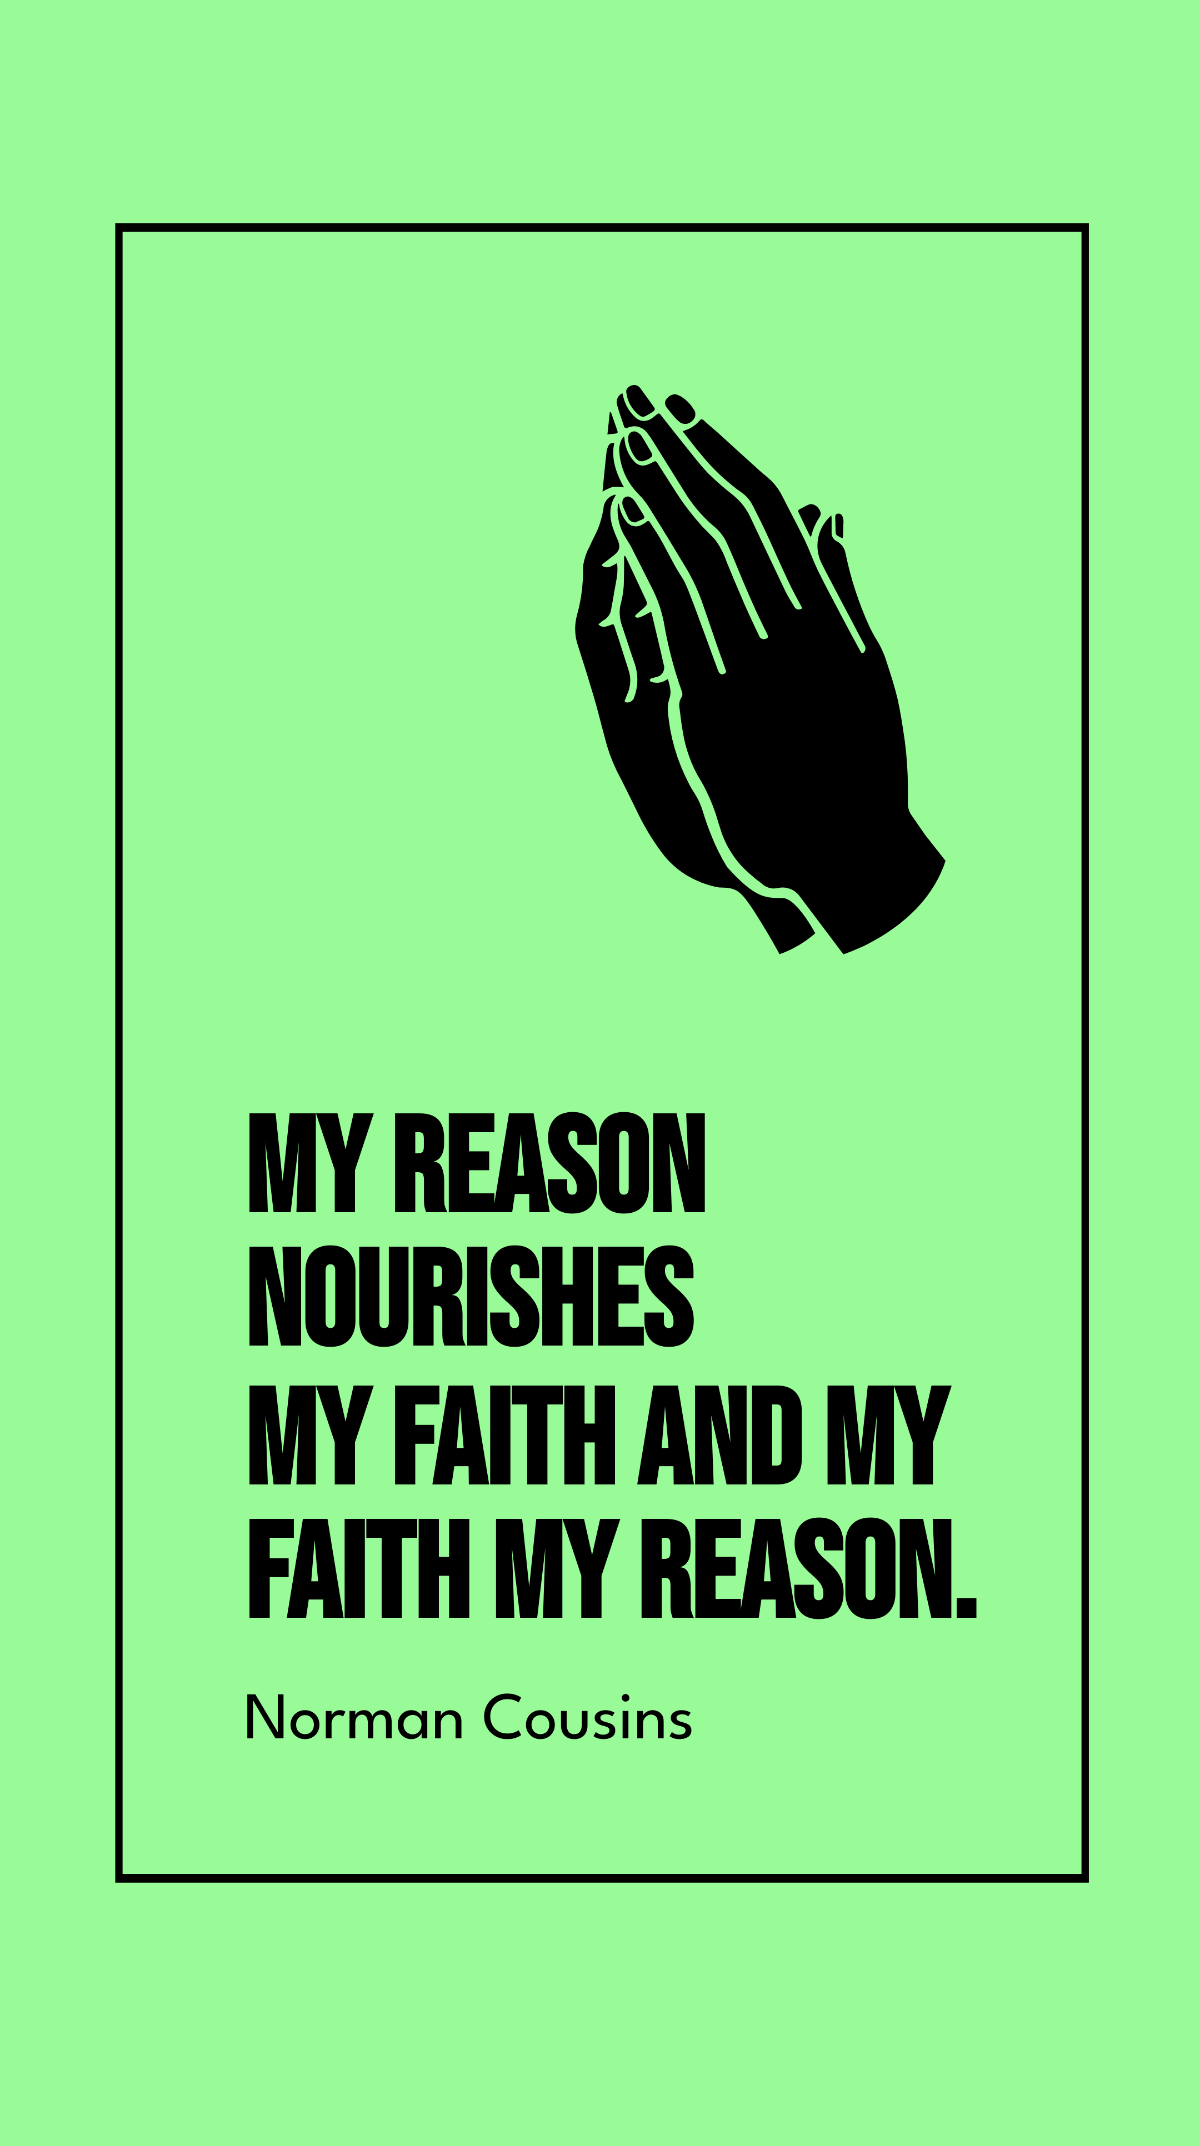 Free Norman Cousins - My reason nourishes my faith and my faith my reason. Template